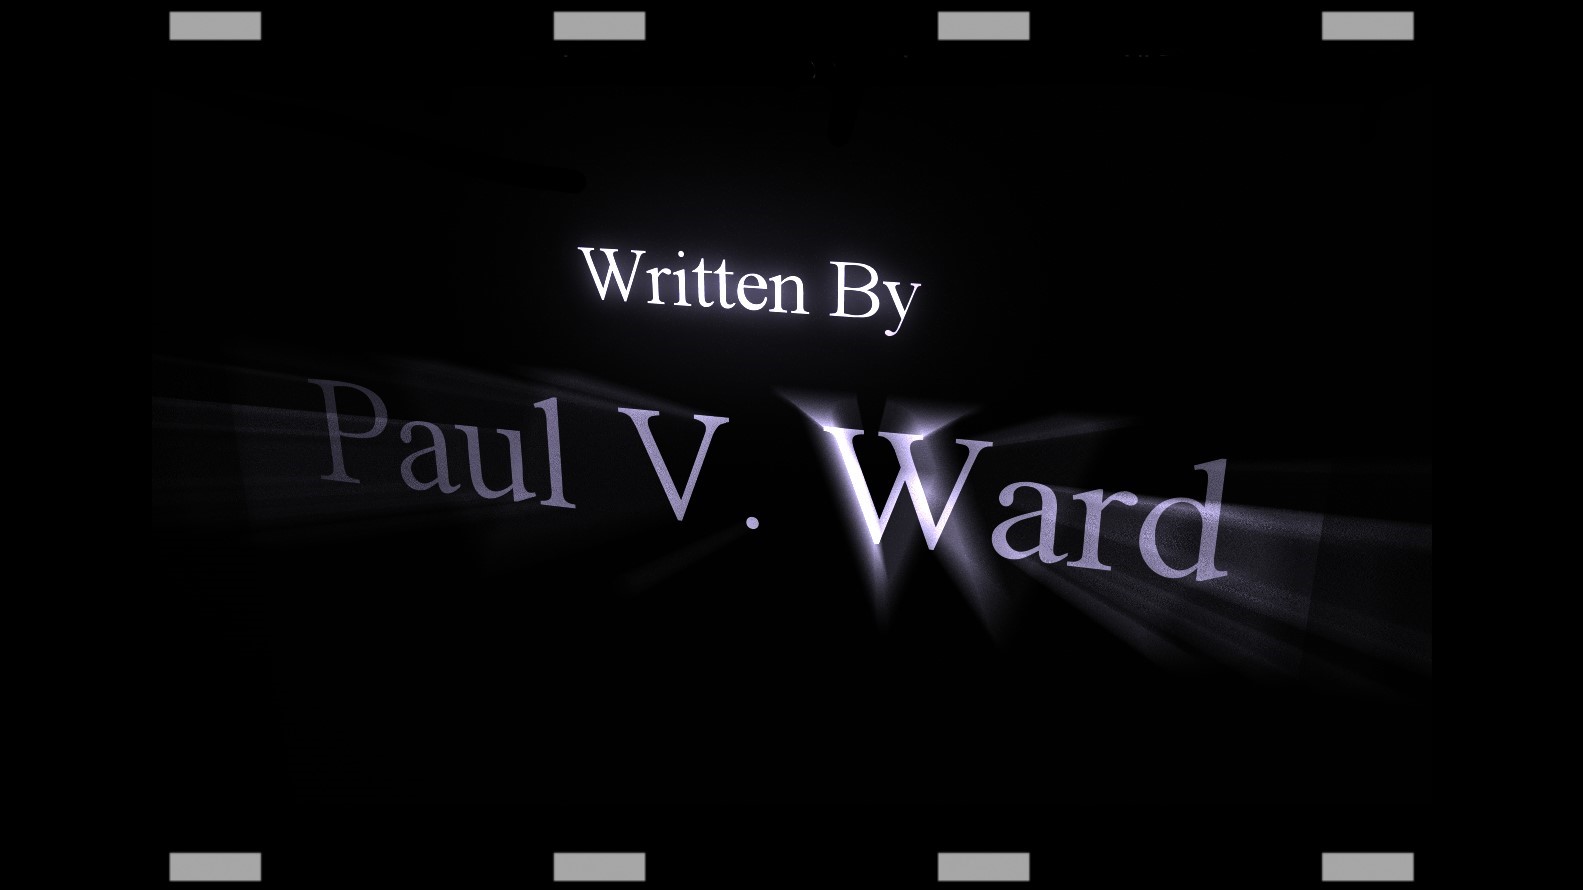 Paul V. Ward